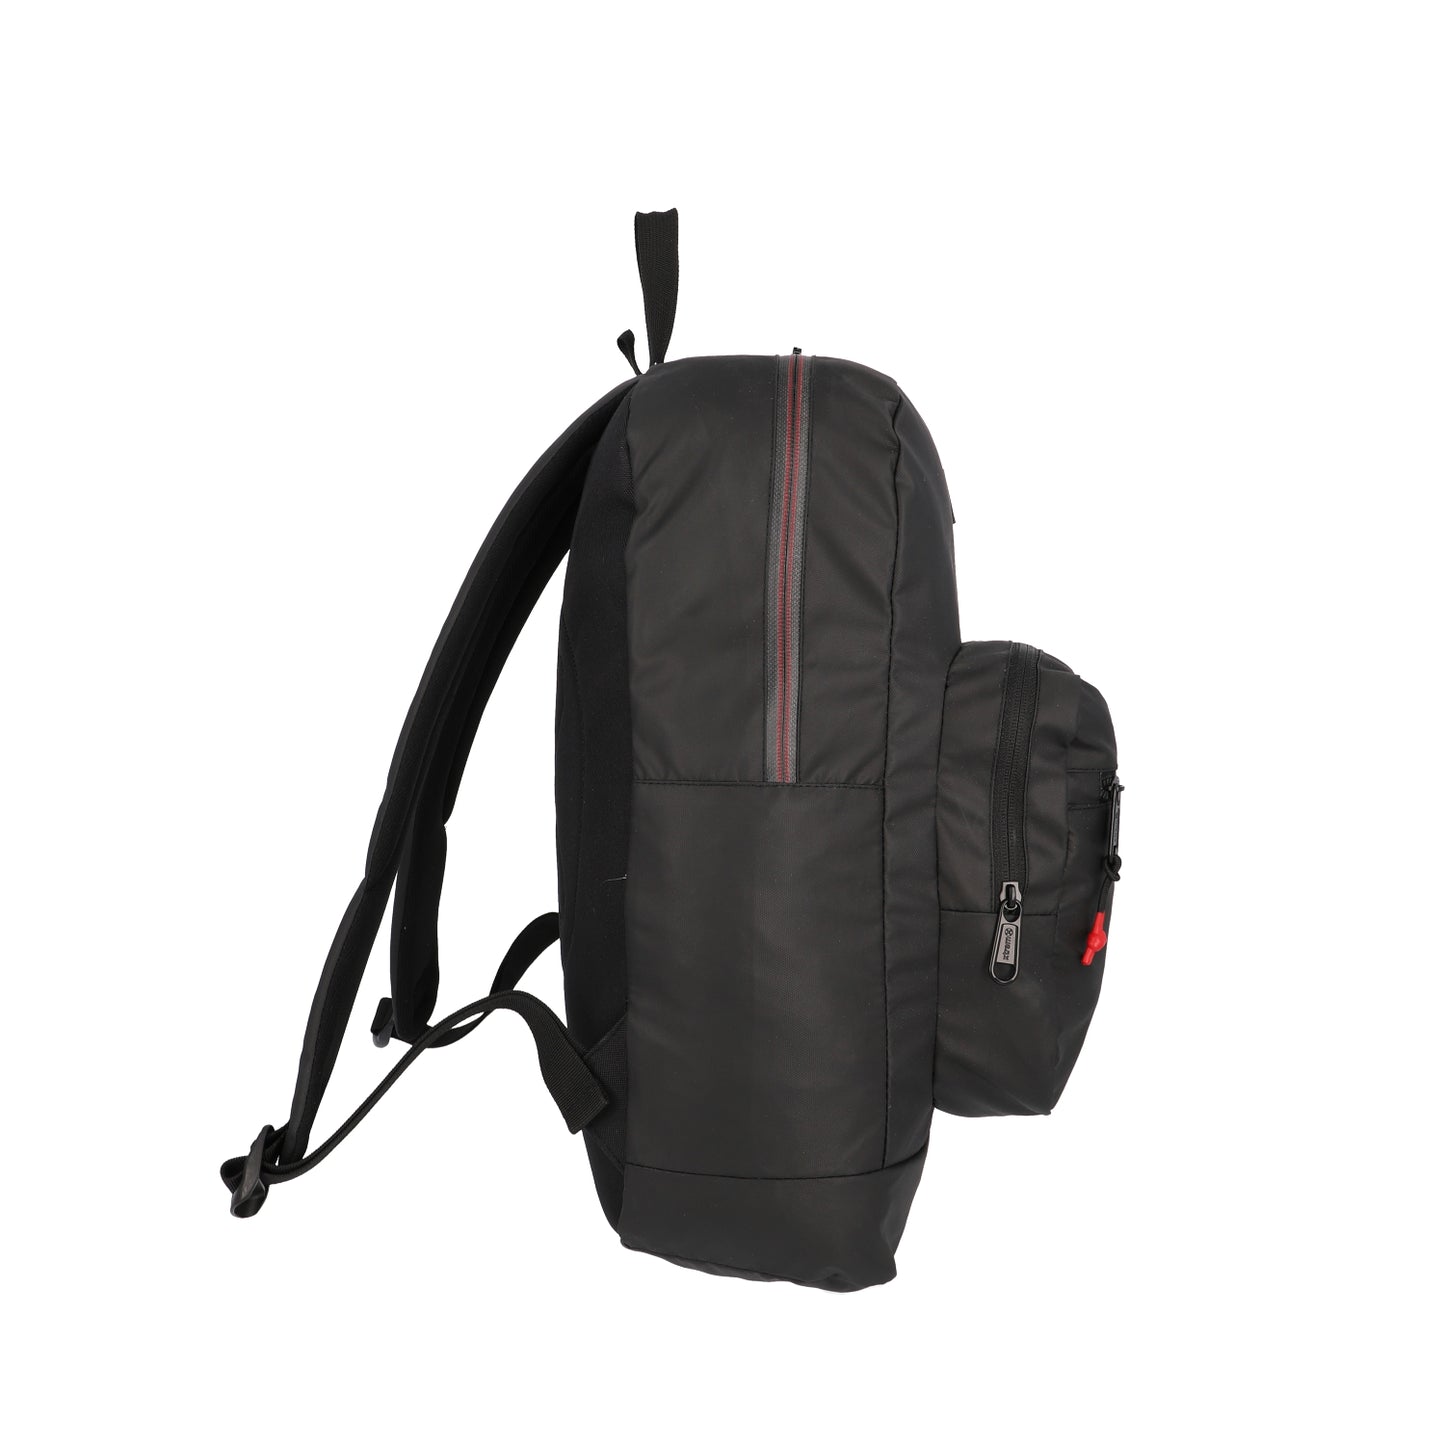 Mochila Lifestyle Backpack Vito 244 Black Rever